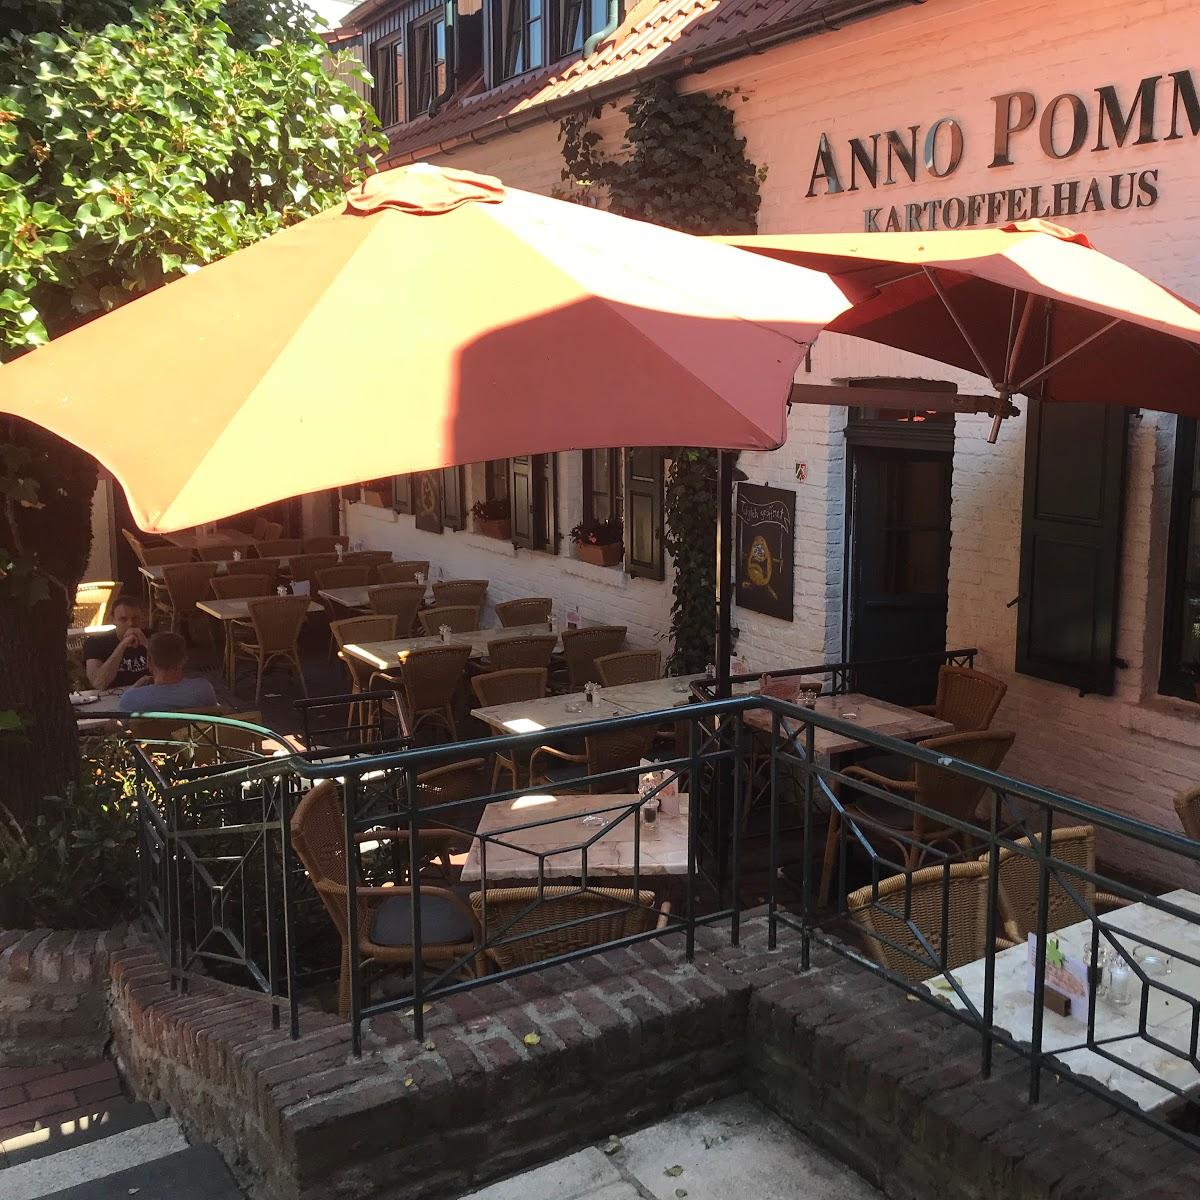 Restaurant "Anno Pomm" in Köln